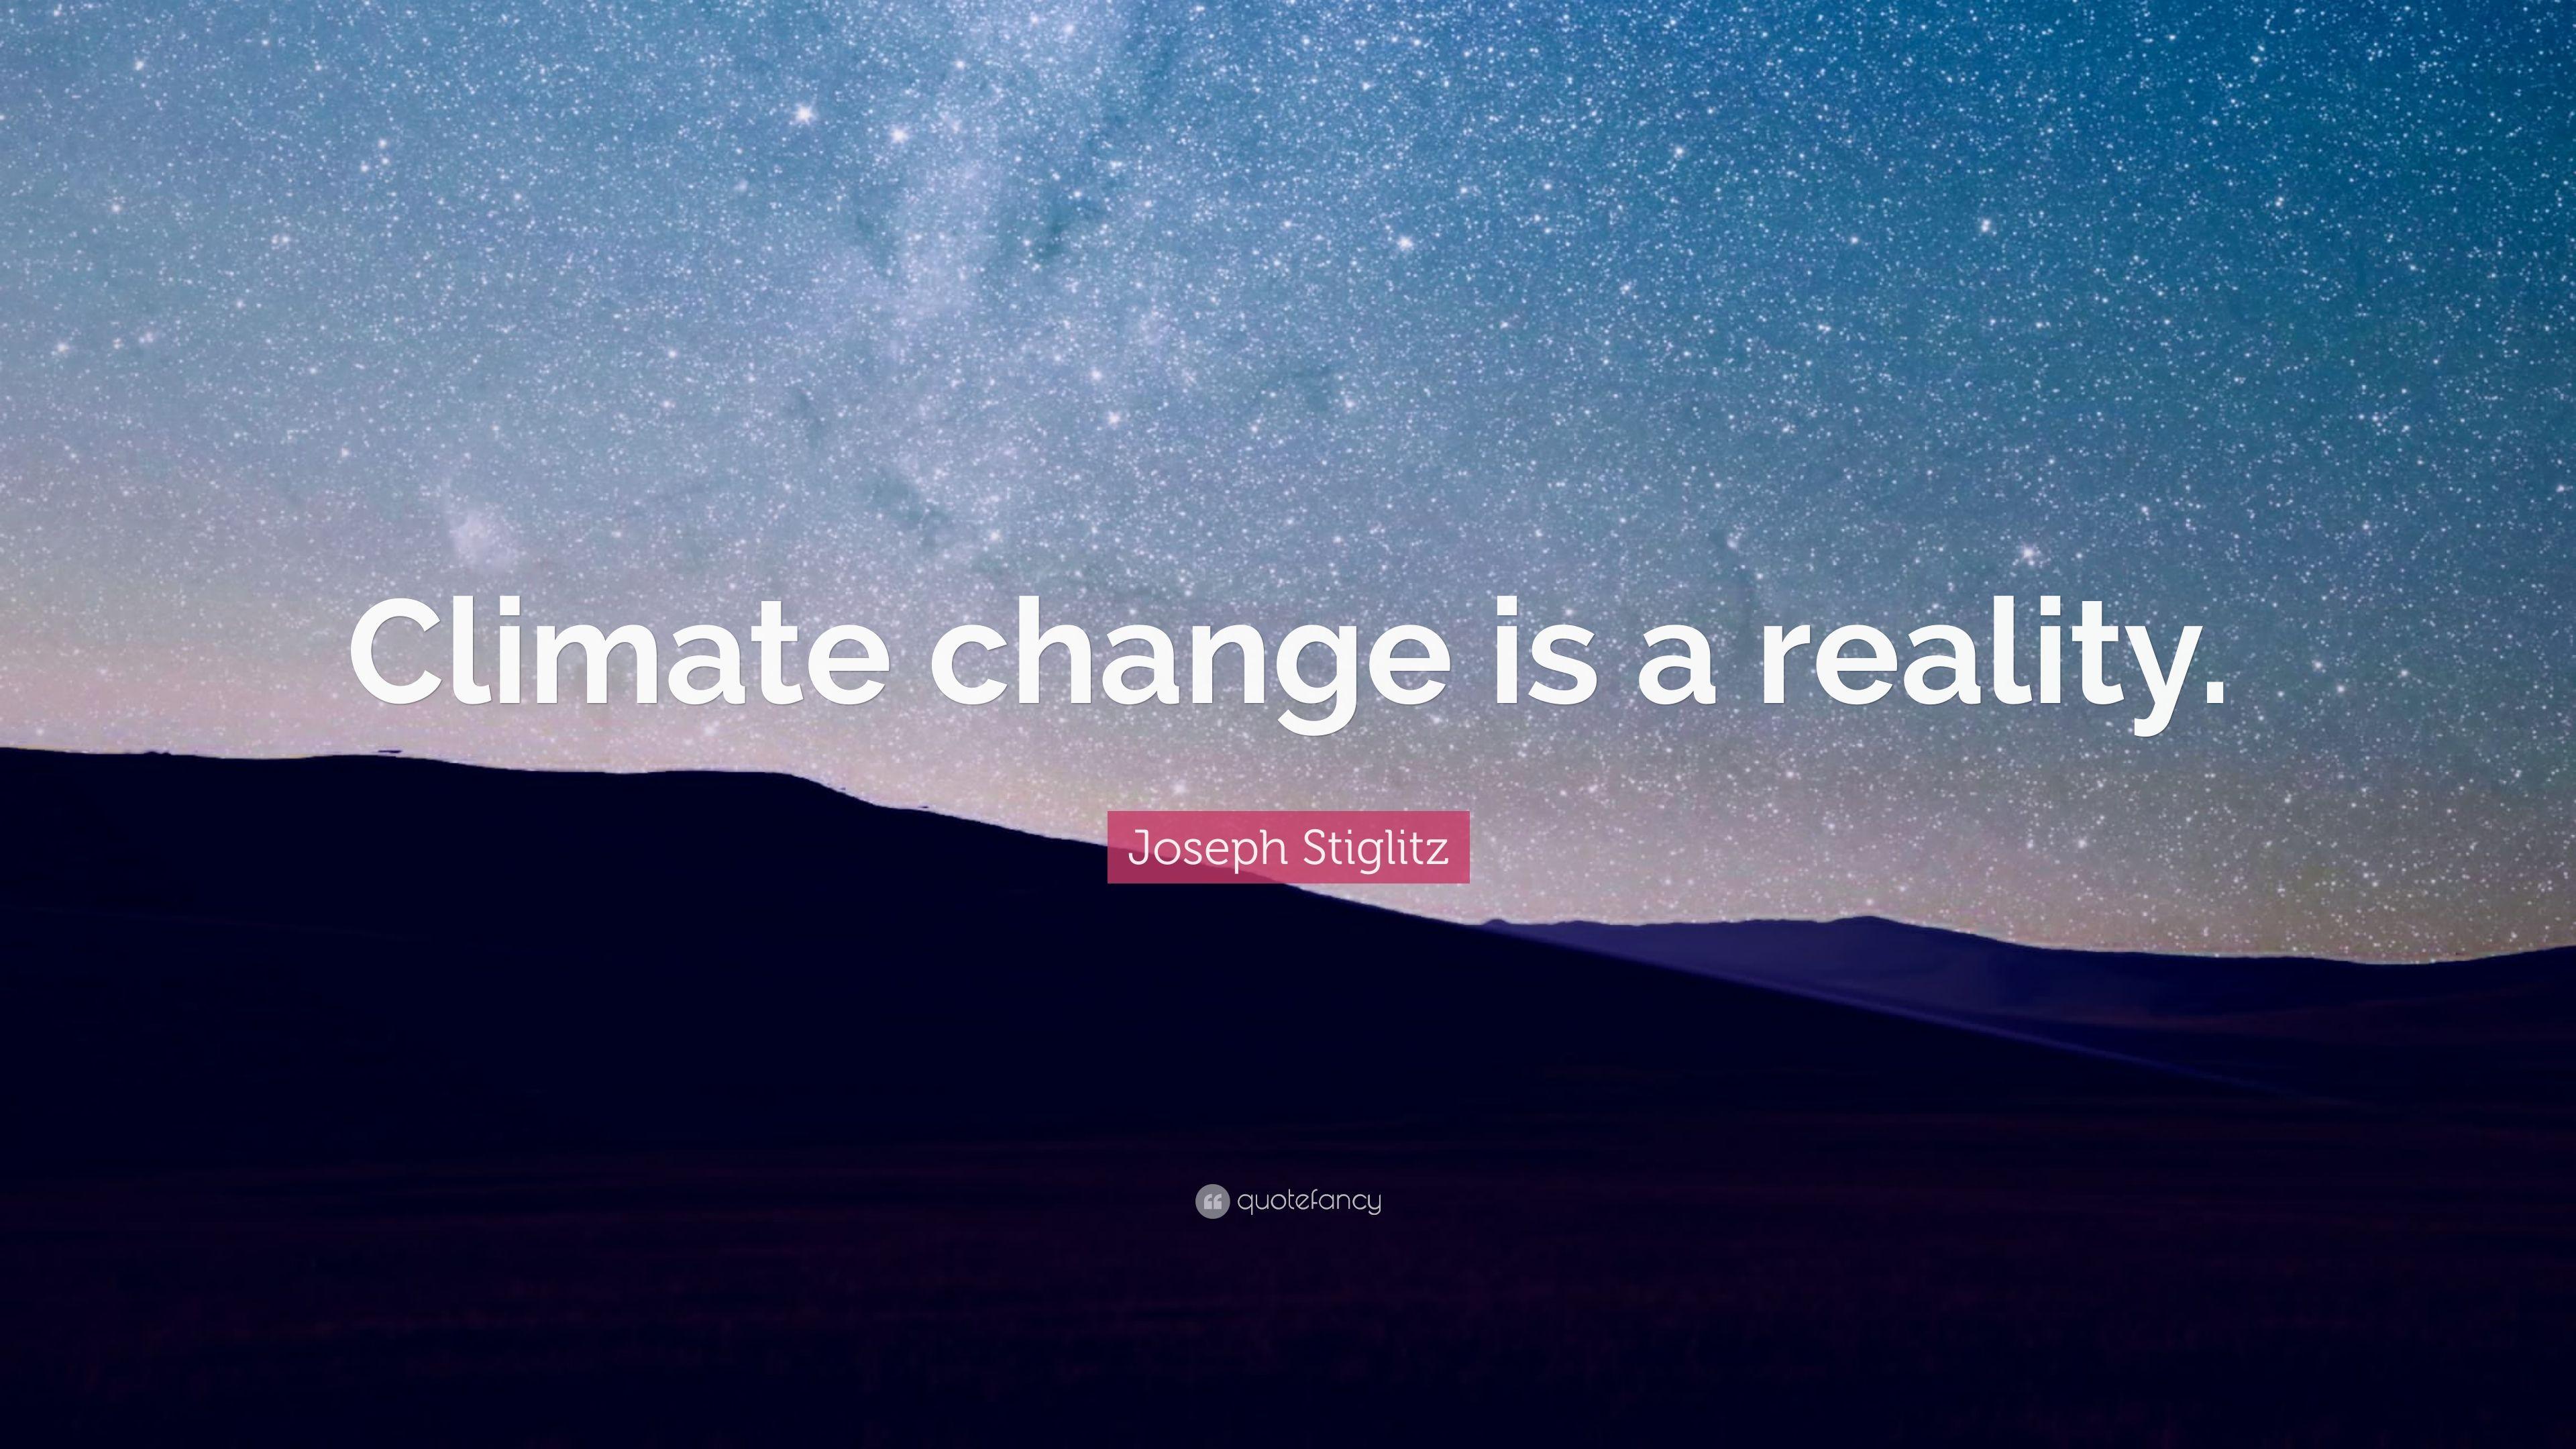 Joseph Stiglitz Quote: “Climate change is a reality.” 10 wallpaper